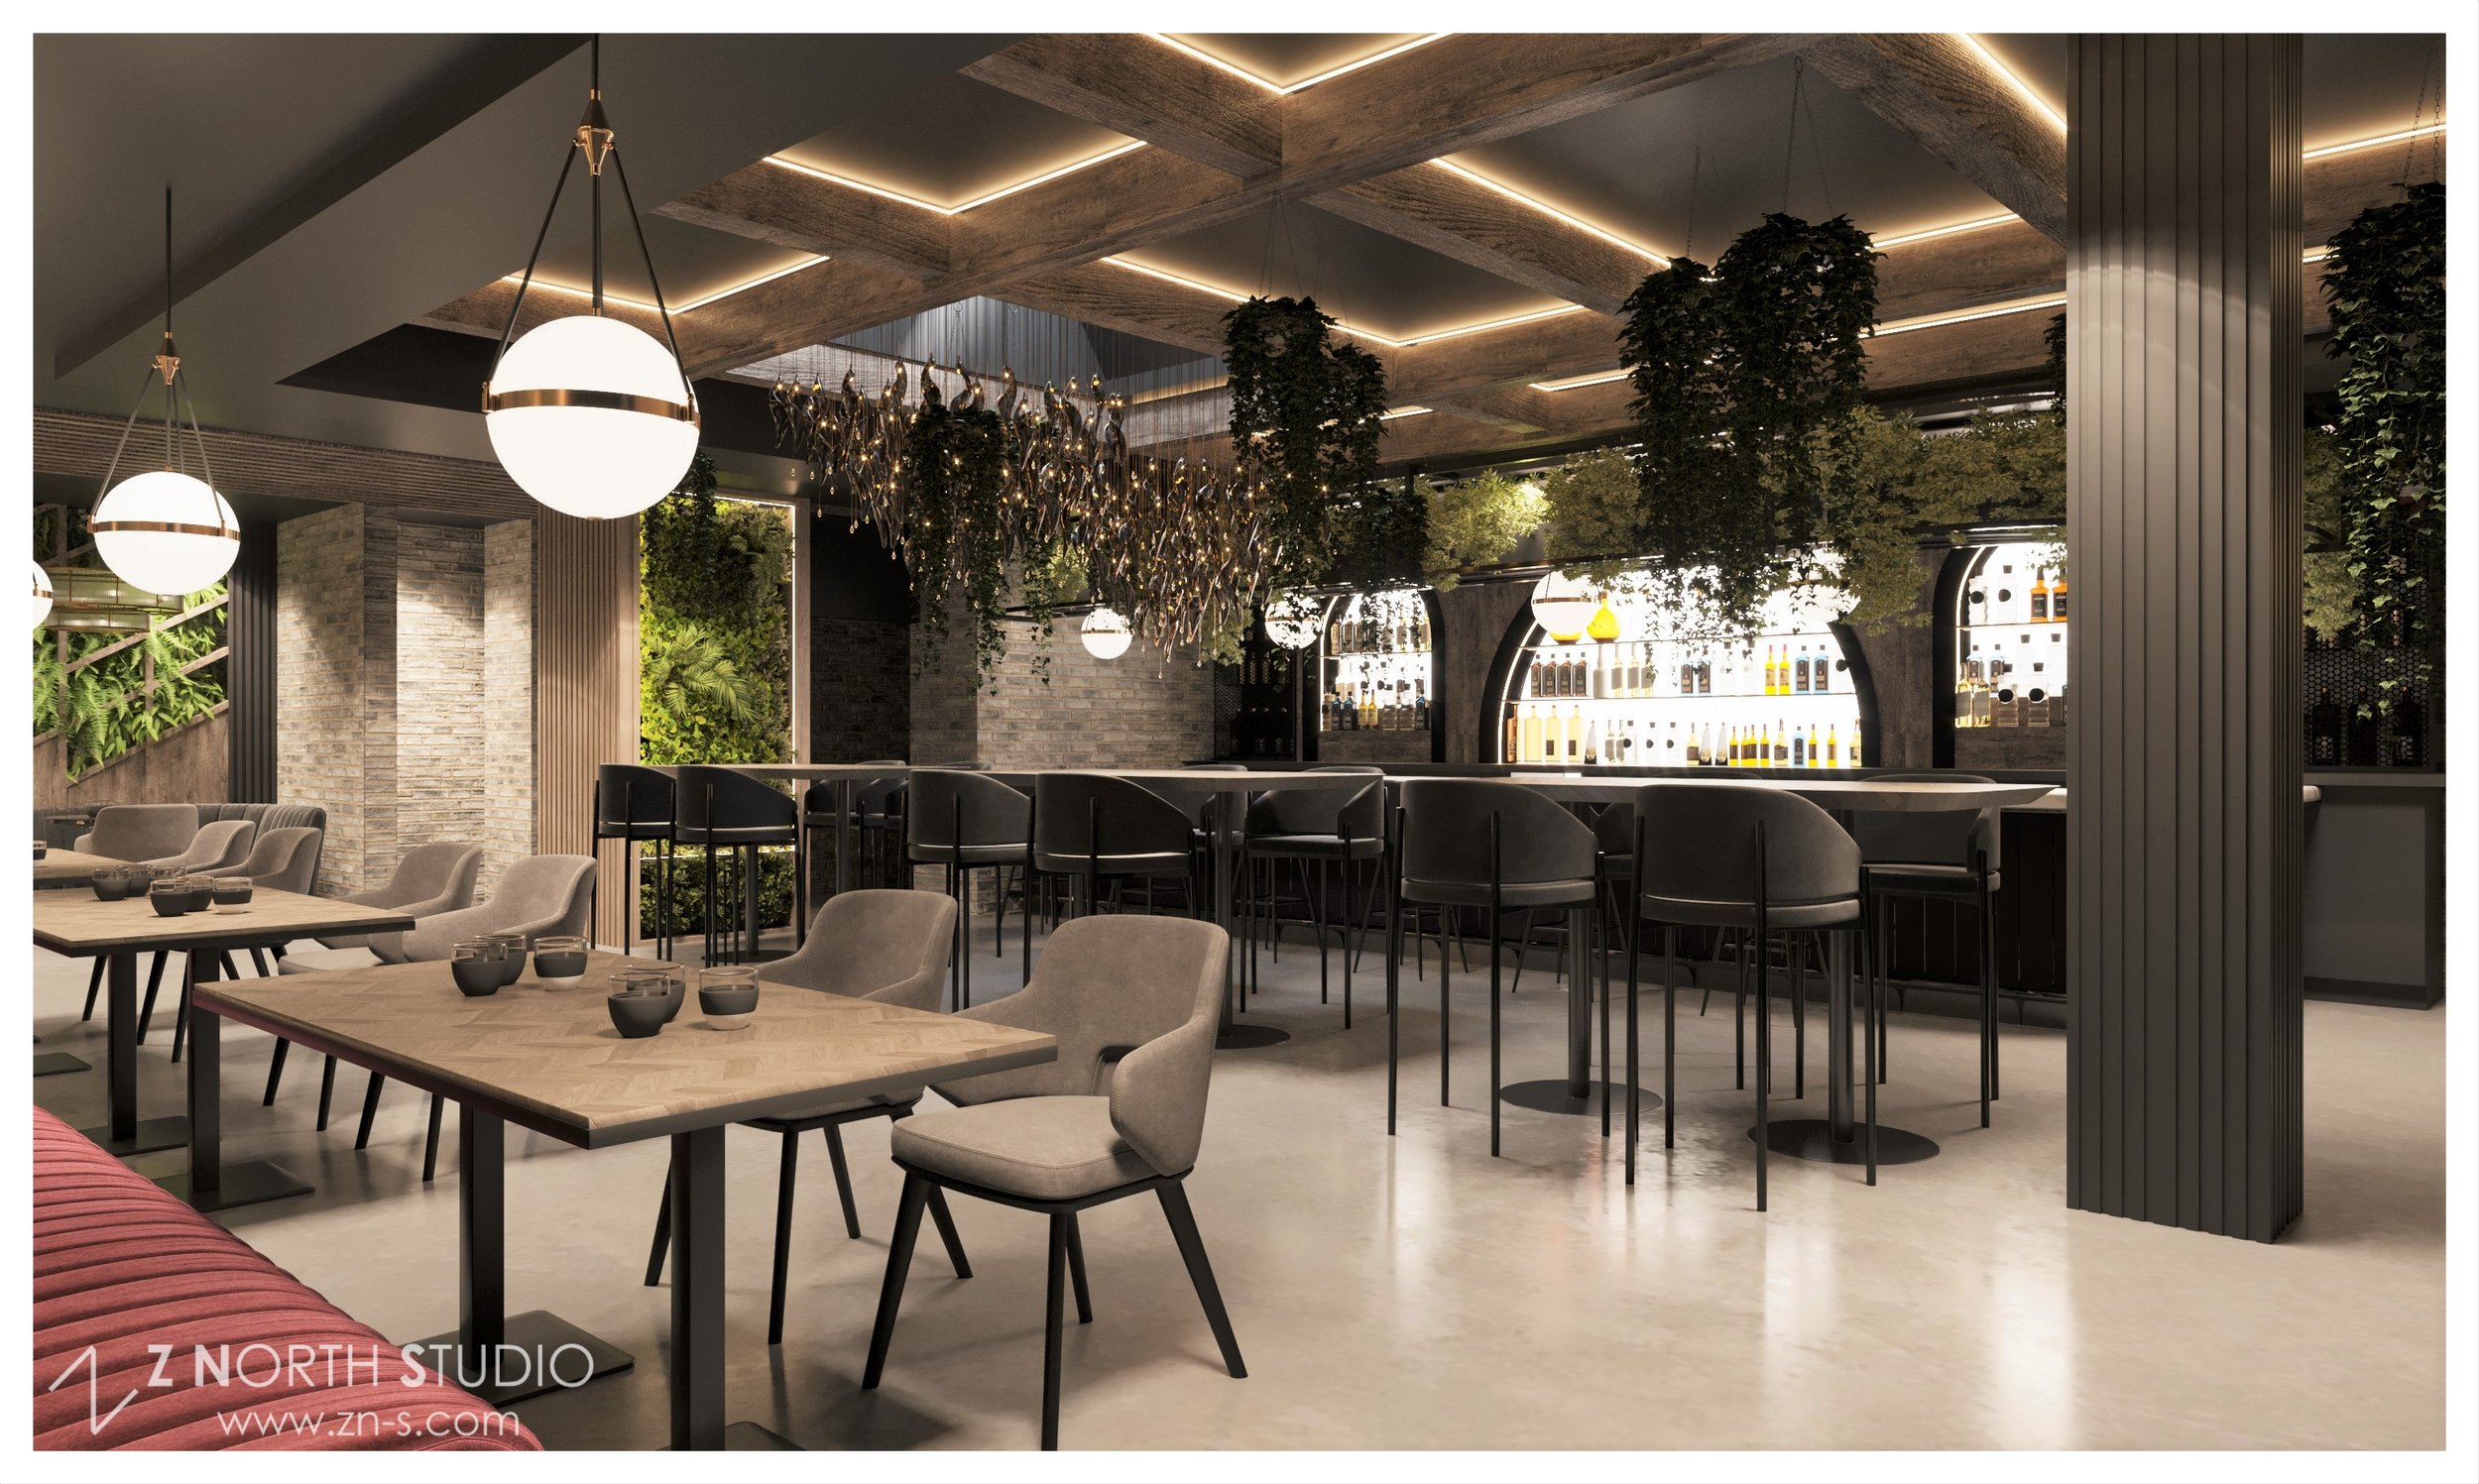 Flavio Restaurant Design - Z North Studio - Bar Area Area Design zn-s com (1).jpg